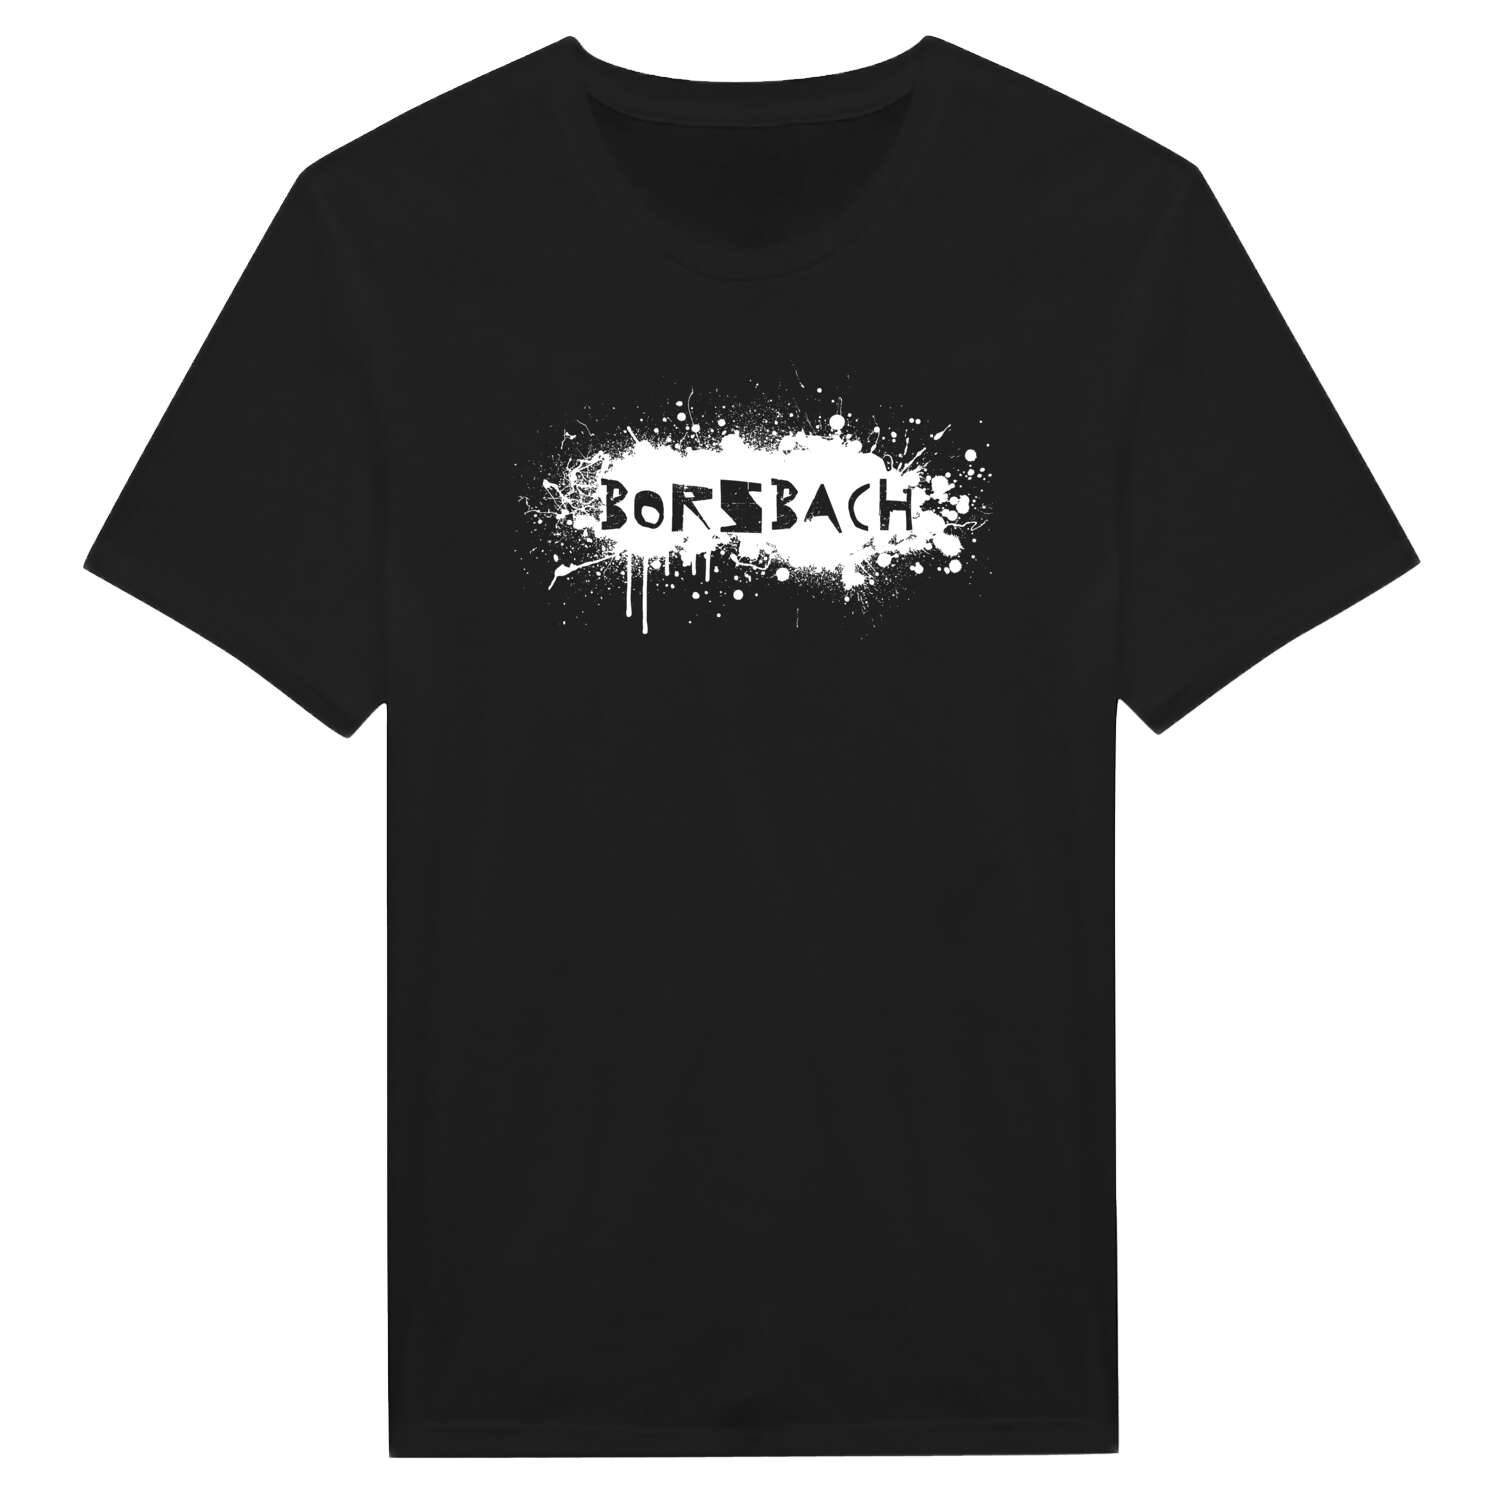 Borsbach T-Shirt »Paint Splash Punk«